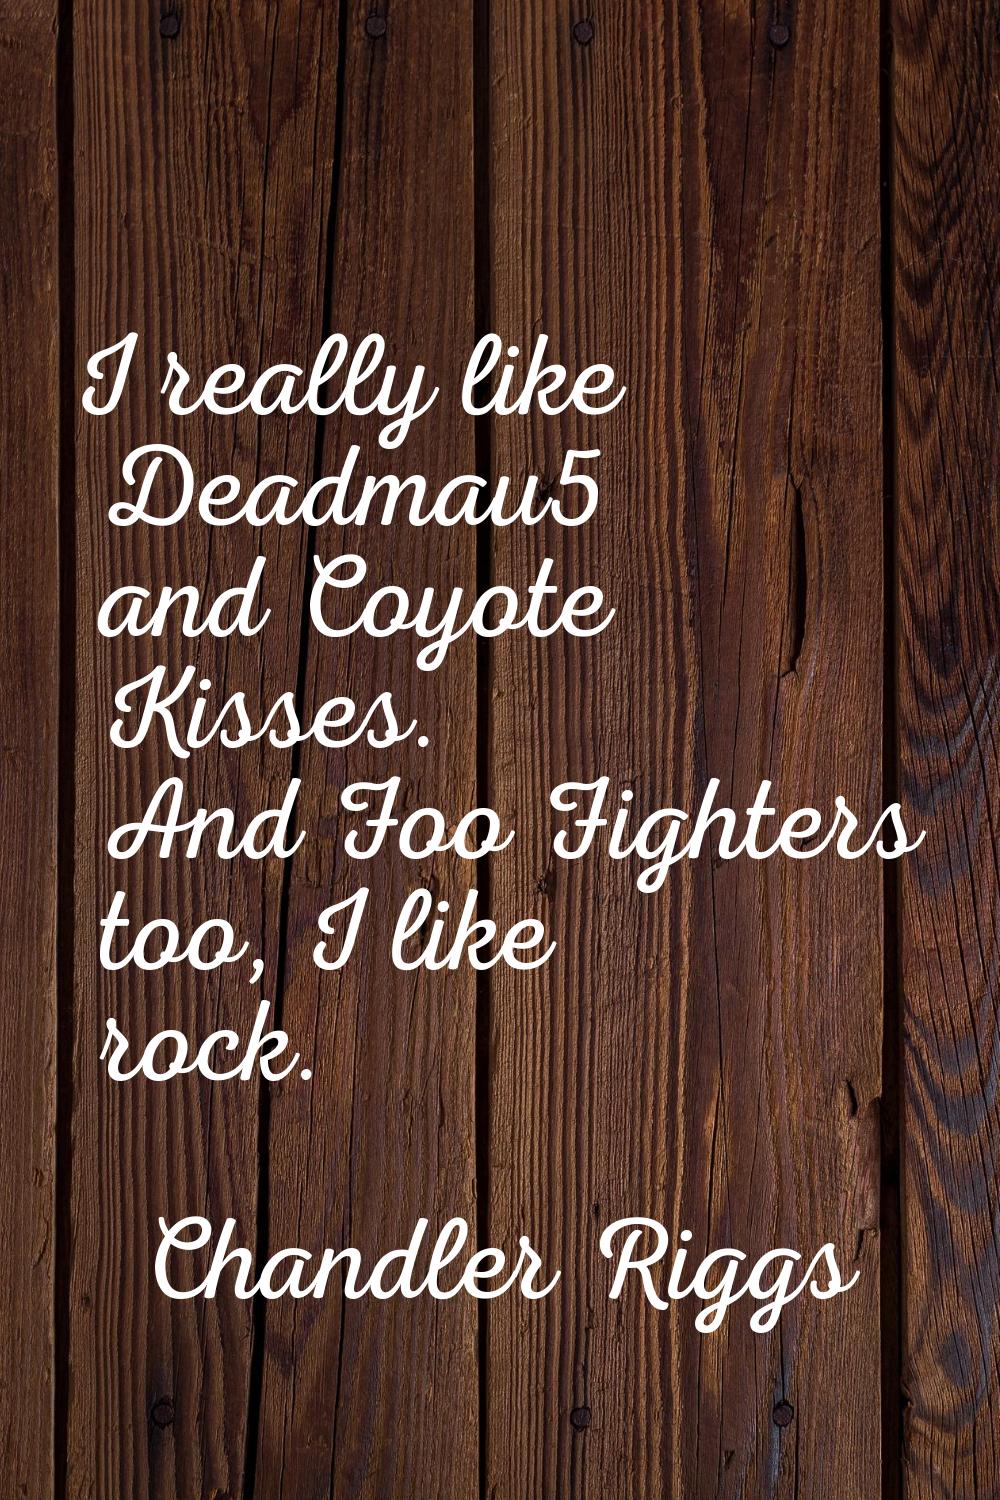 I really like Deadmau5 and Coyote Kisses. And Foo Fighters too, I like rock.